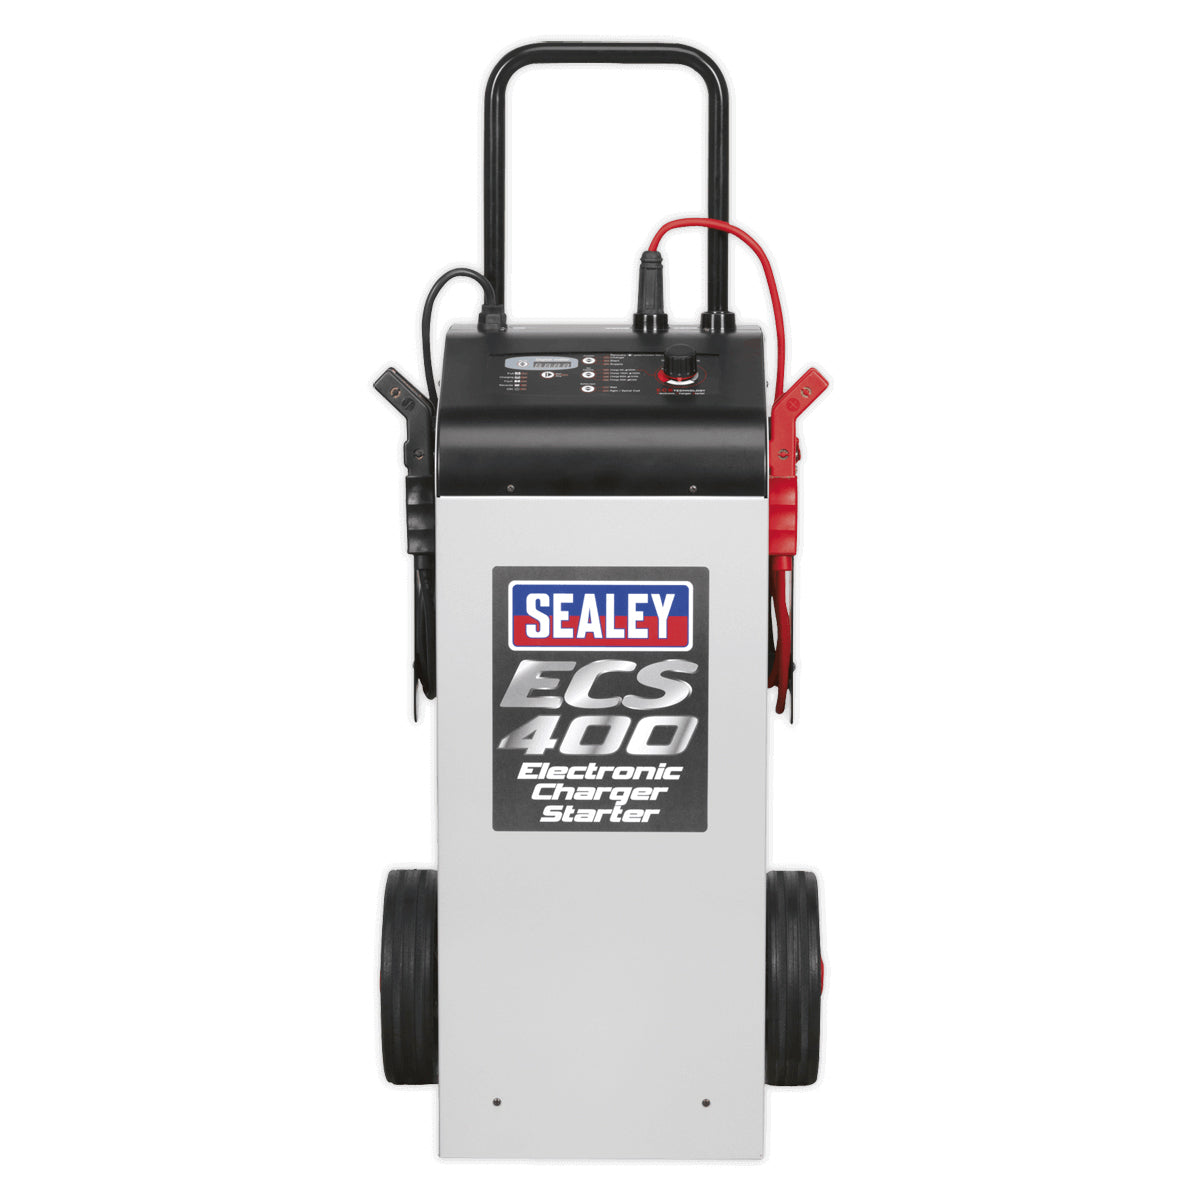 Sealey ECS400 12/24V Electronic Charger Starter 75/400A